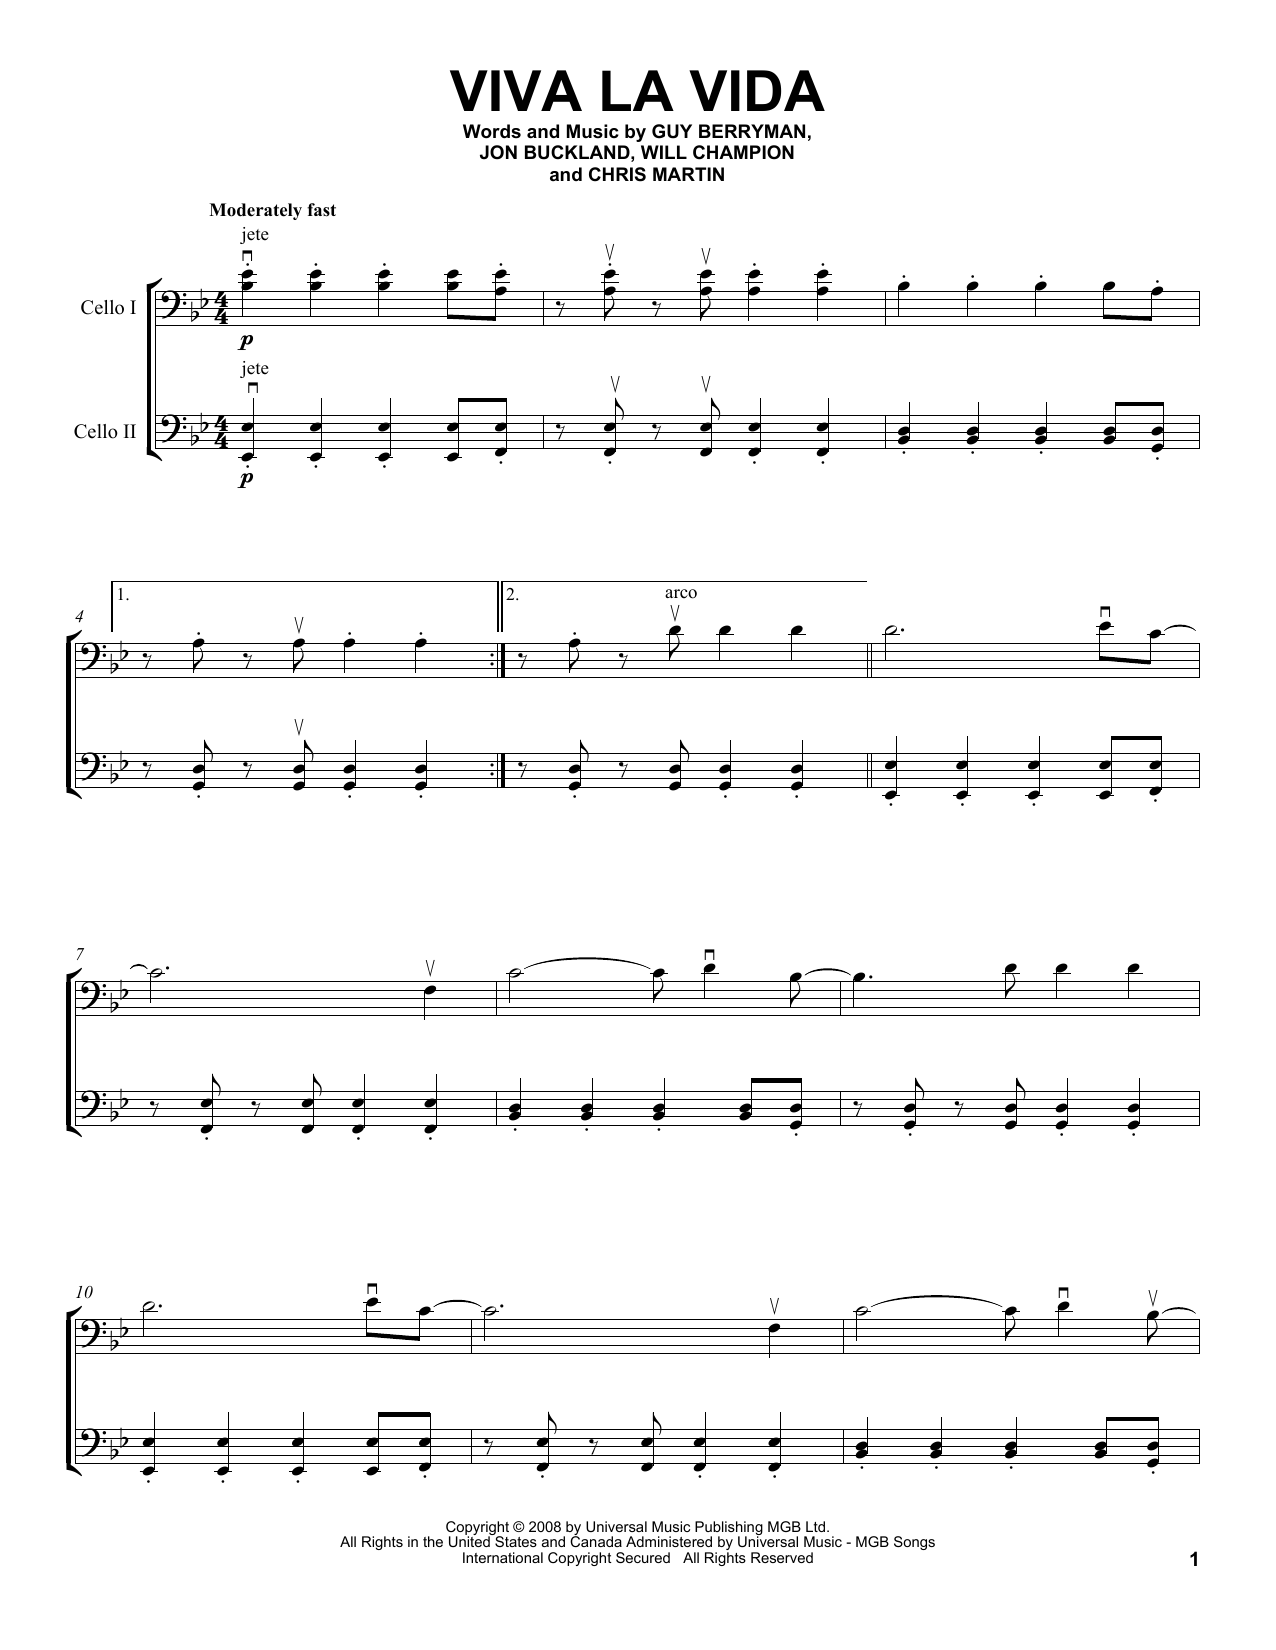 2Cellos Viva La Vida Sheet Music Notes & Chords for Cello Duet - Download or Print PDF